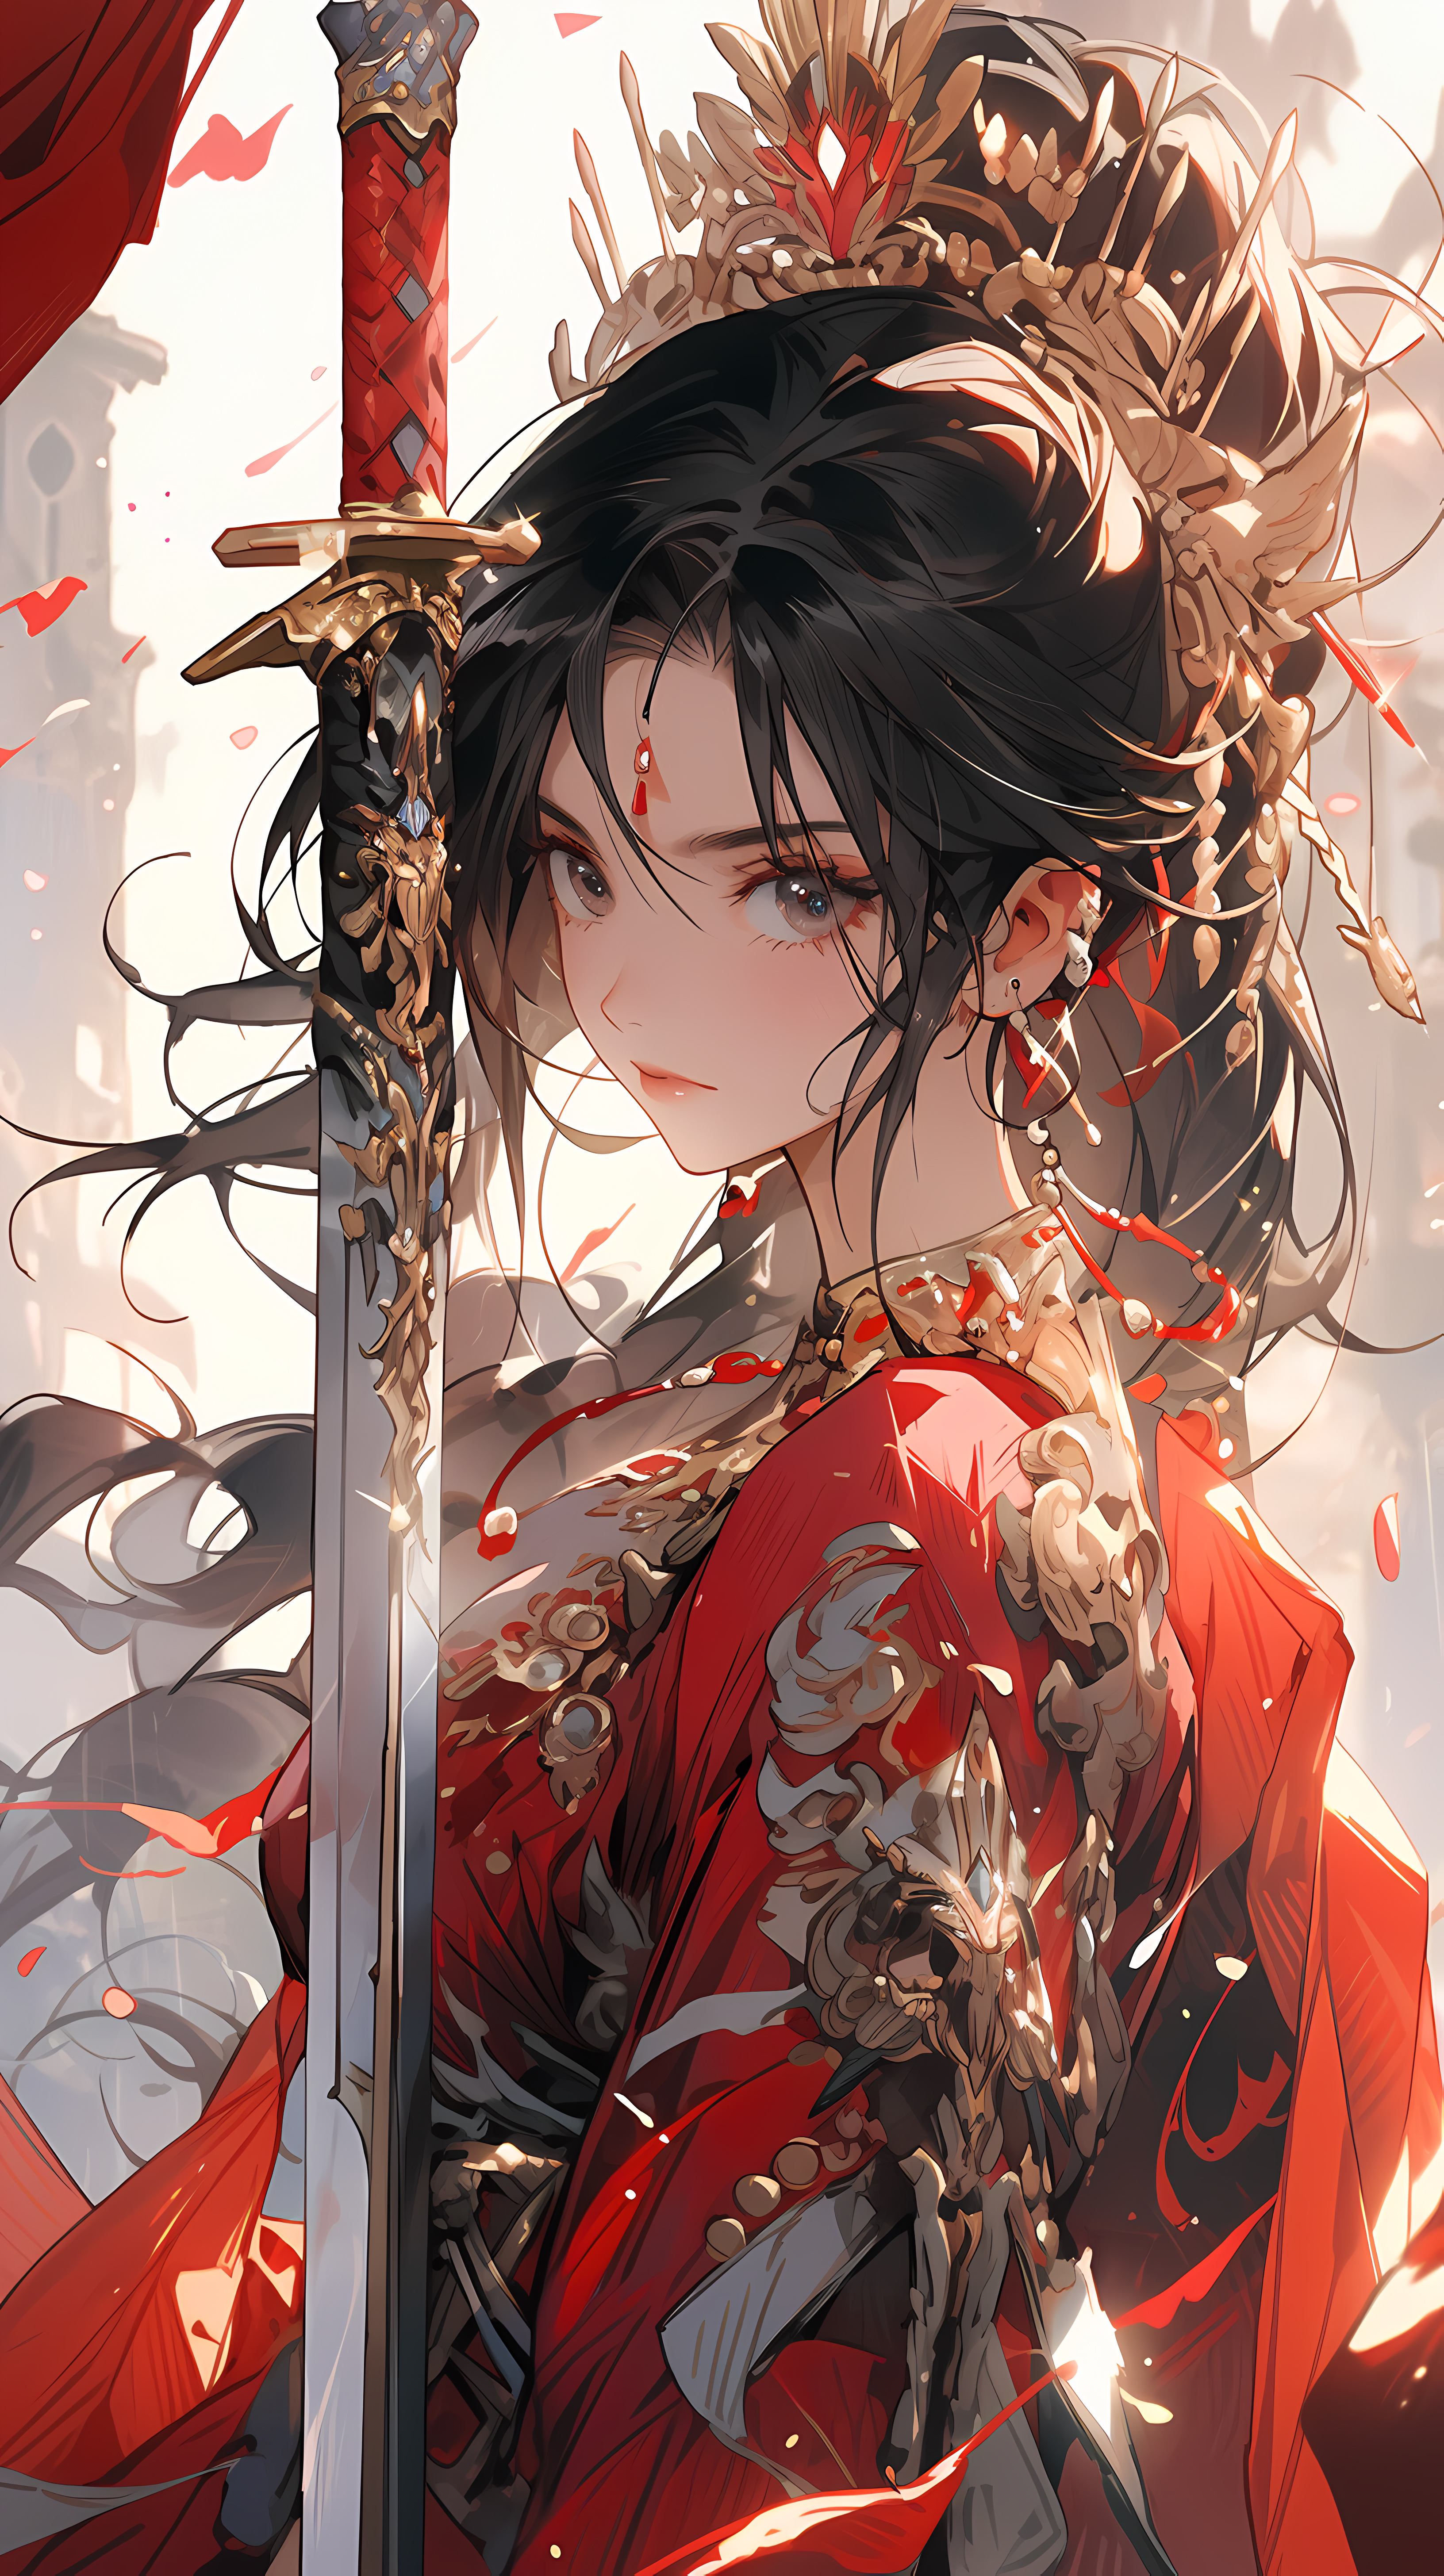 Anime 3264x5824 anime anime girls AI art portrait display long hair sword weapon looking at viewer kimono